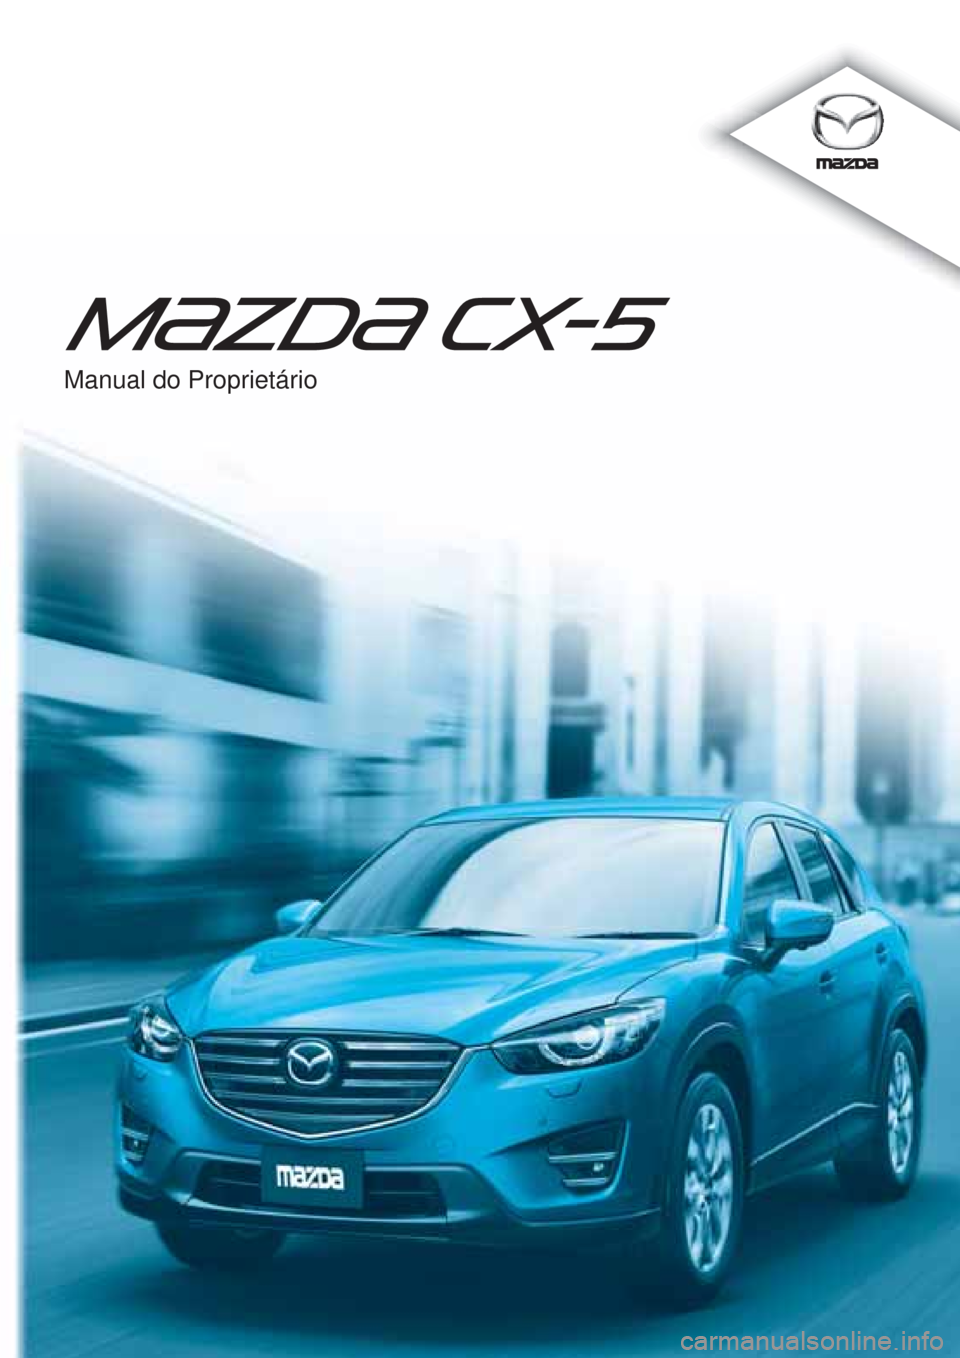 MAZDA MODEL CX-5 2015  Manual do proprietário (in Portuguese) Manual do Proprietário 